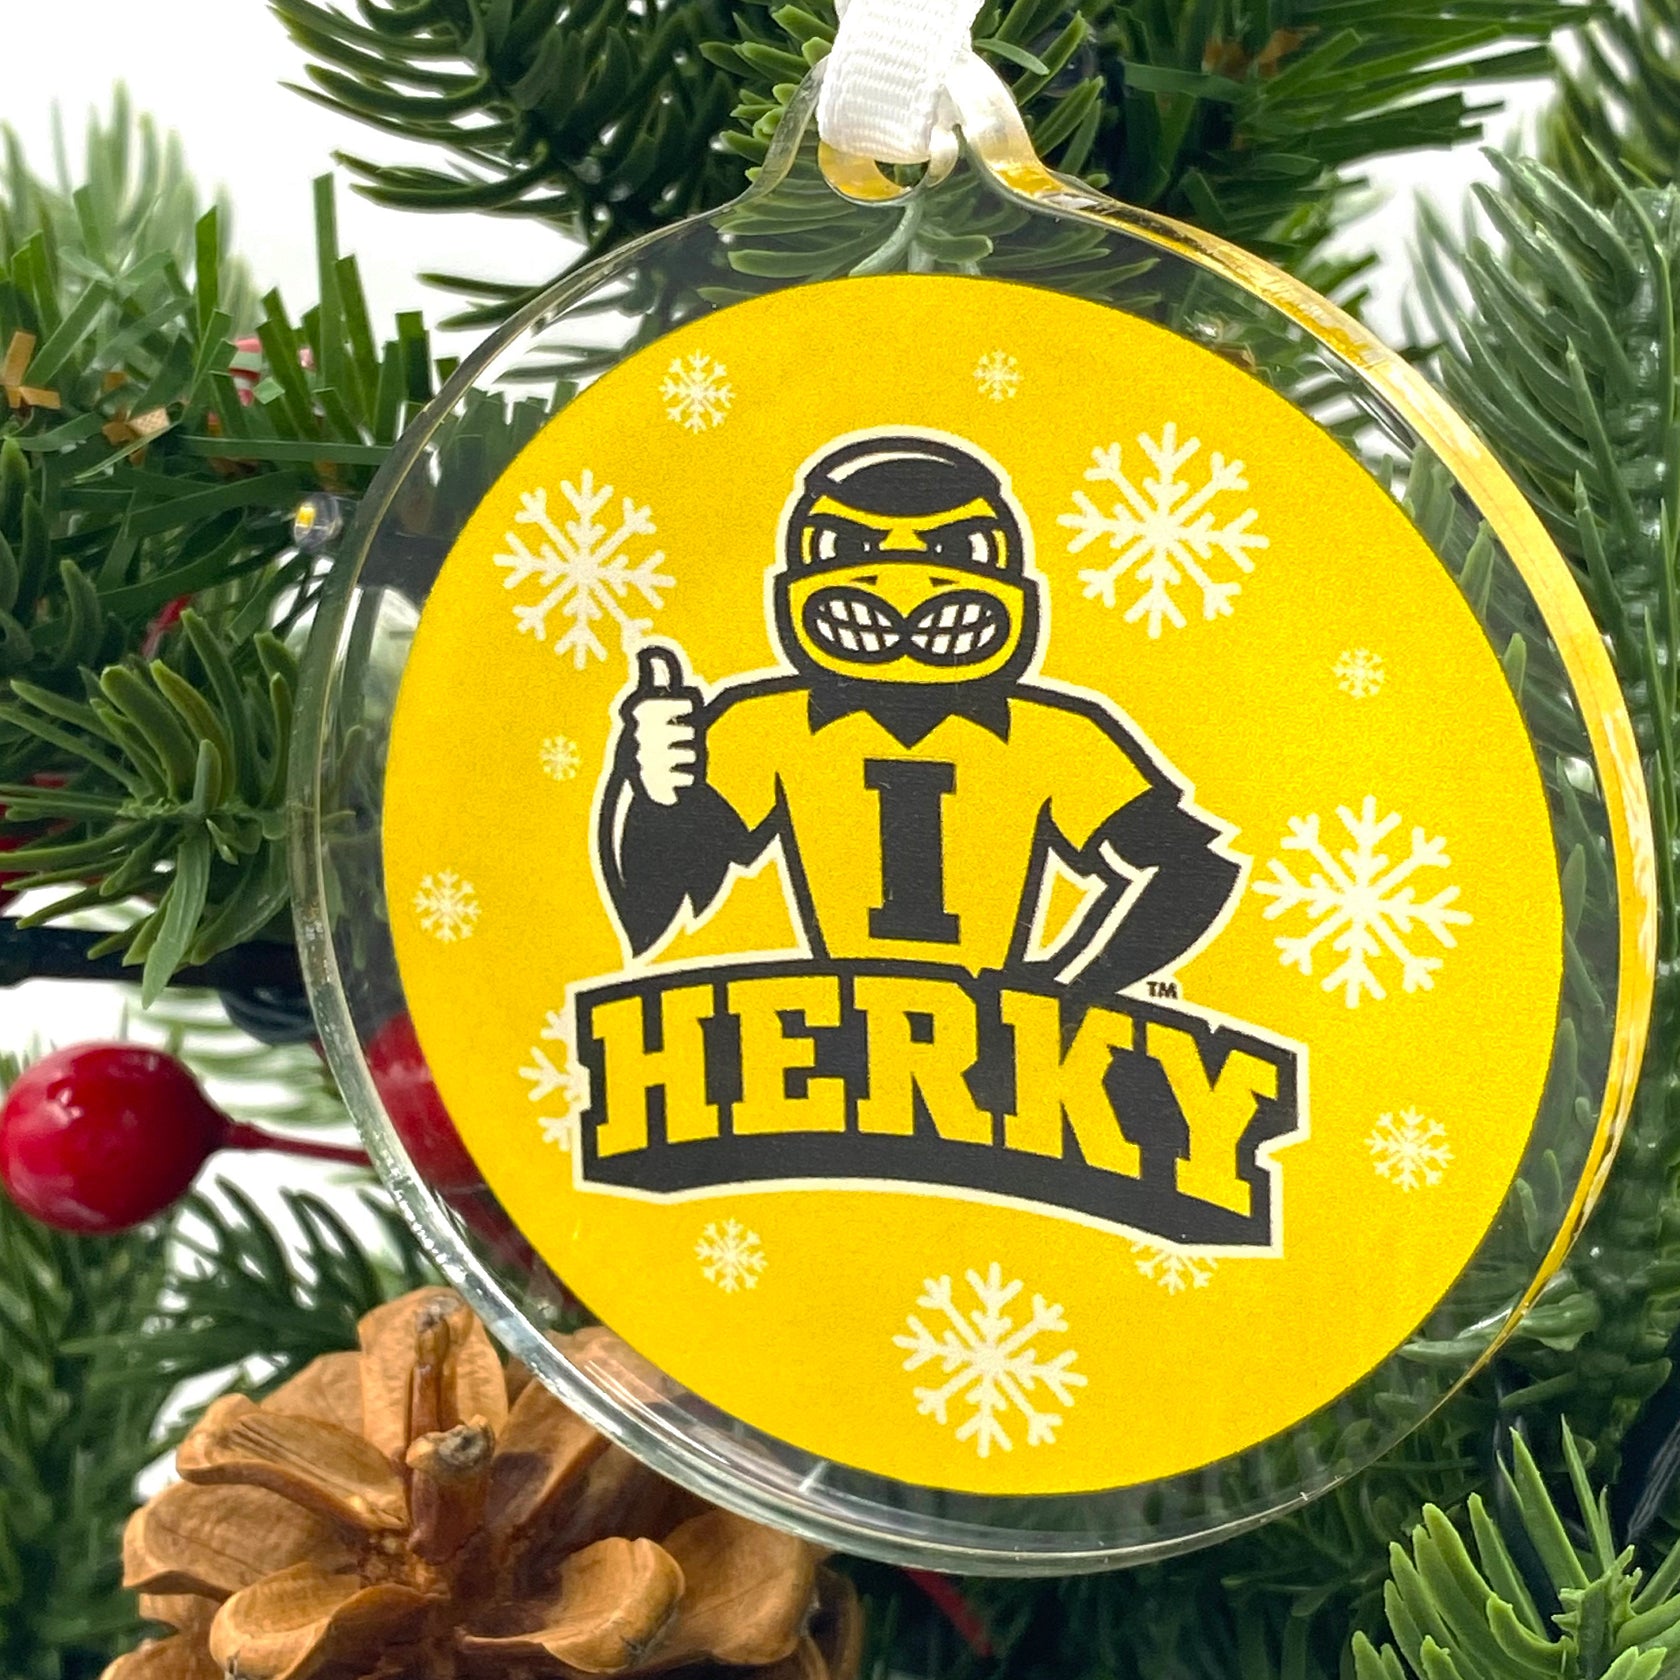 Iowa Hawkeyes - Herky Christmas Ornament